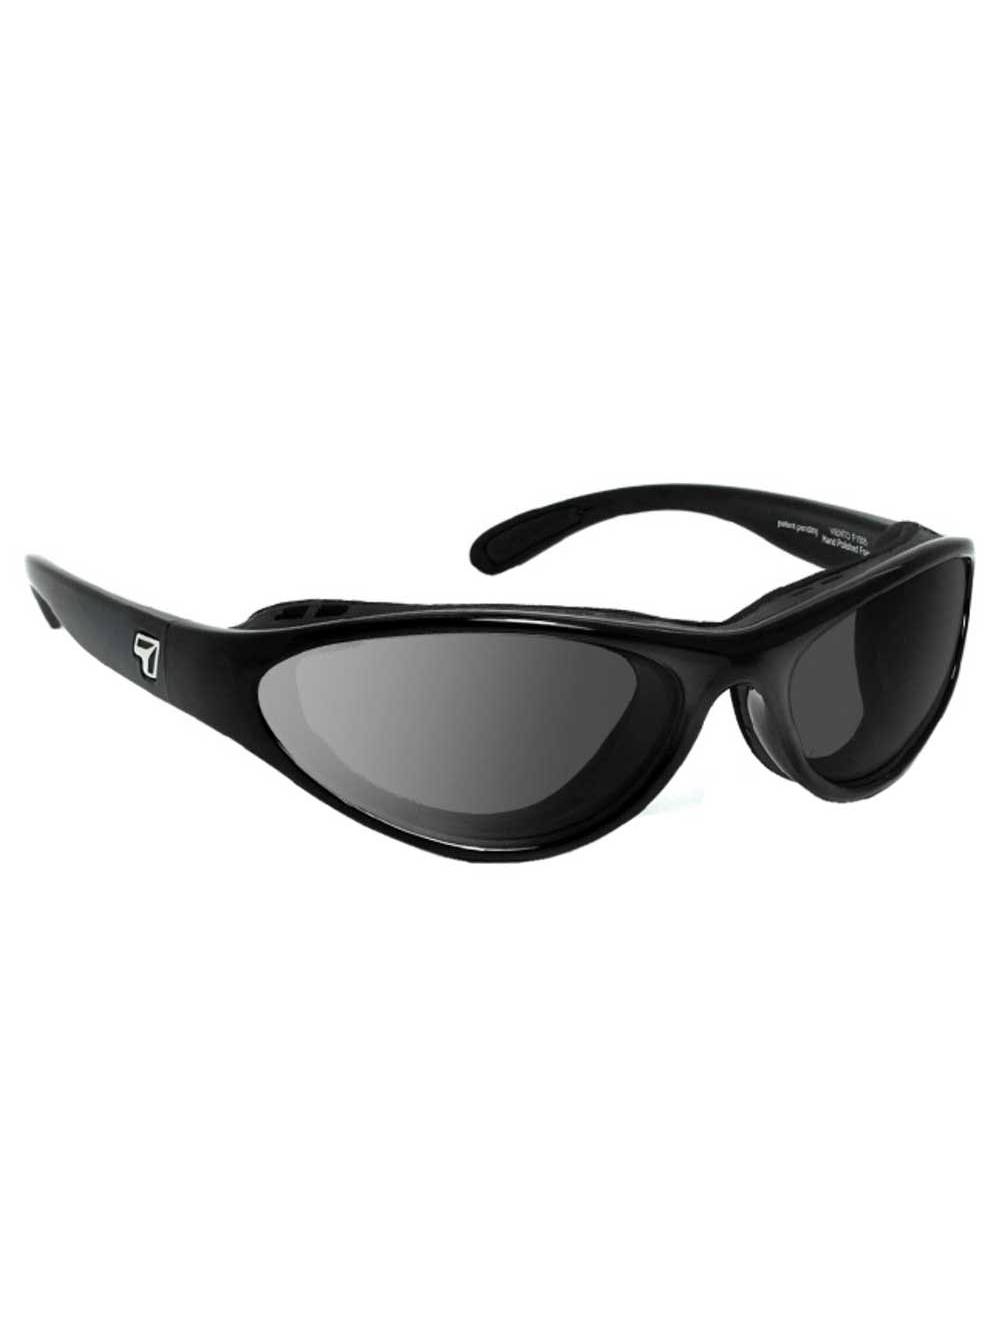 Viento AirShield Sunglasses,Glossy Black Frame,SharpVIew Gray Lens,S-M 150 - image 1 of 4